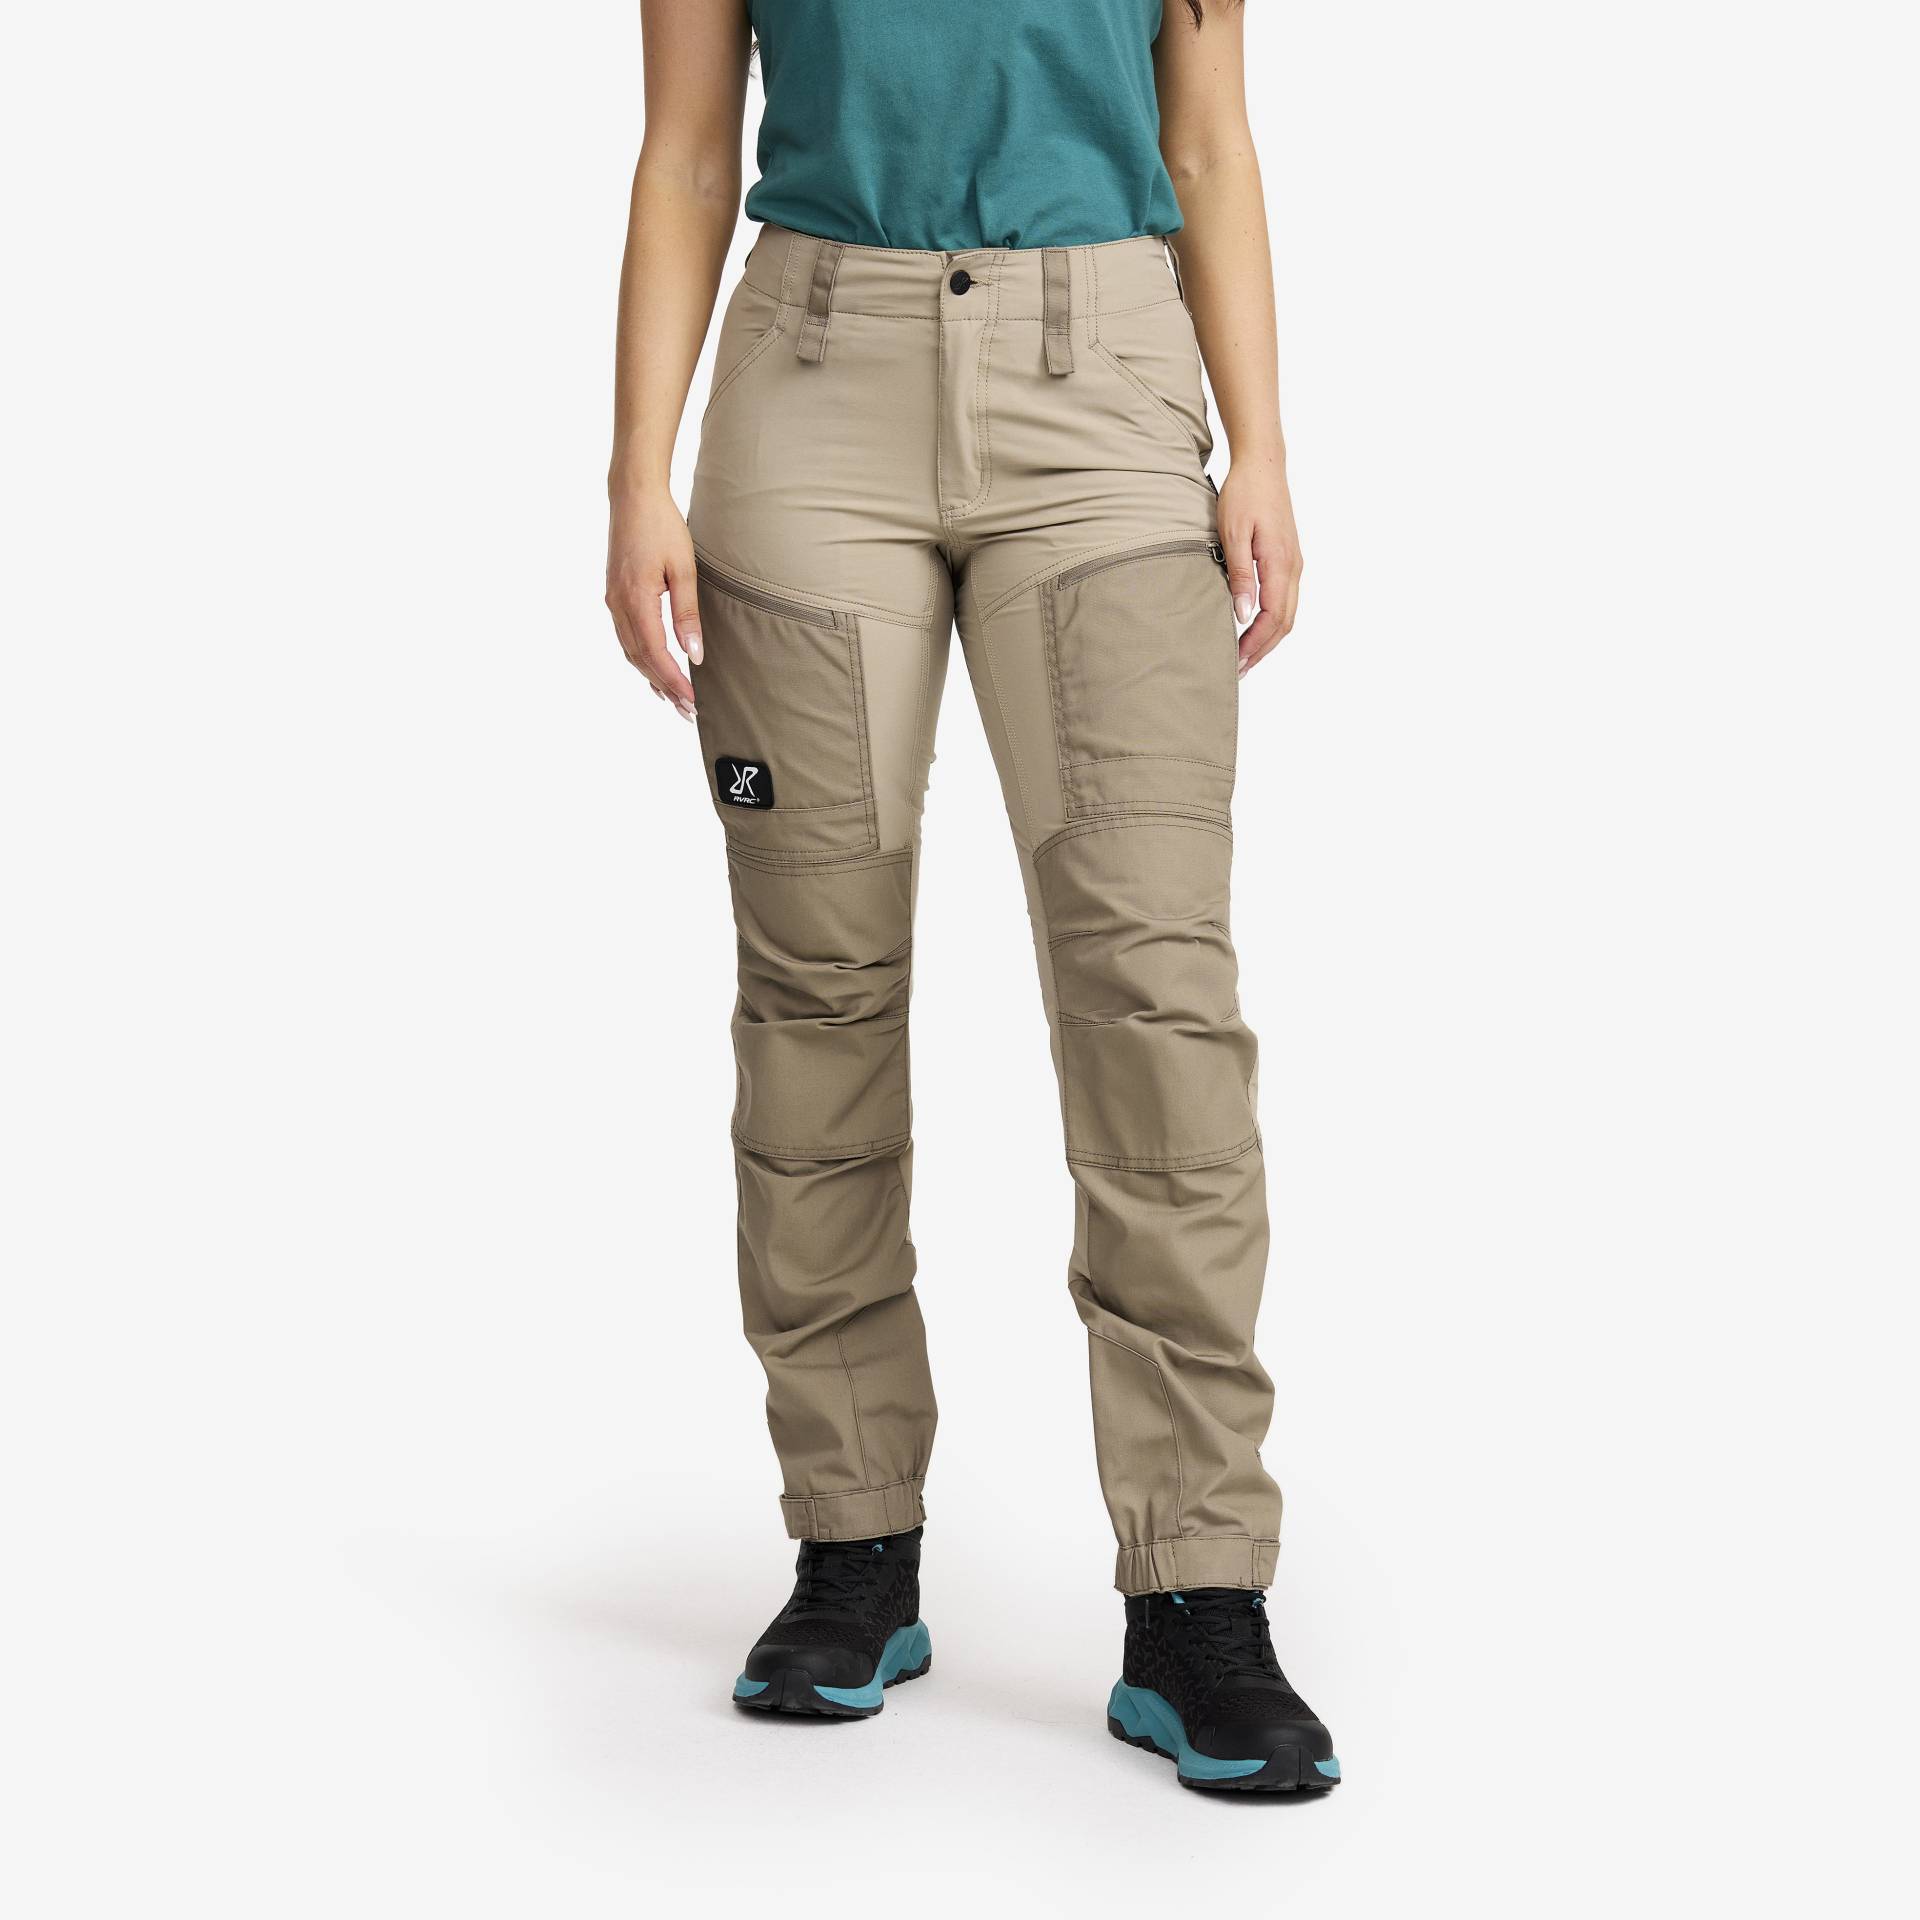 RVRC GP Pro Pants Damen Aluminium/Brindle, Größe:XL - Outdoorhose, Wanderhose & Trekkinghose von RevolutionRace